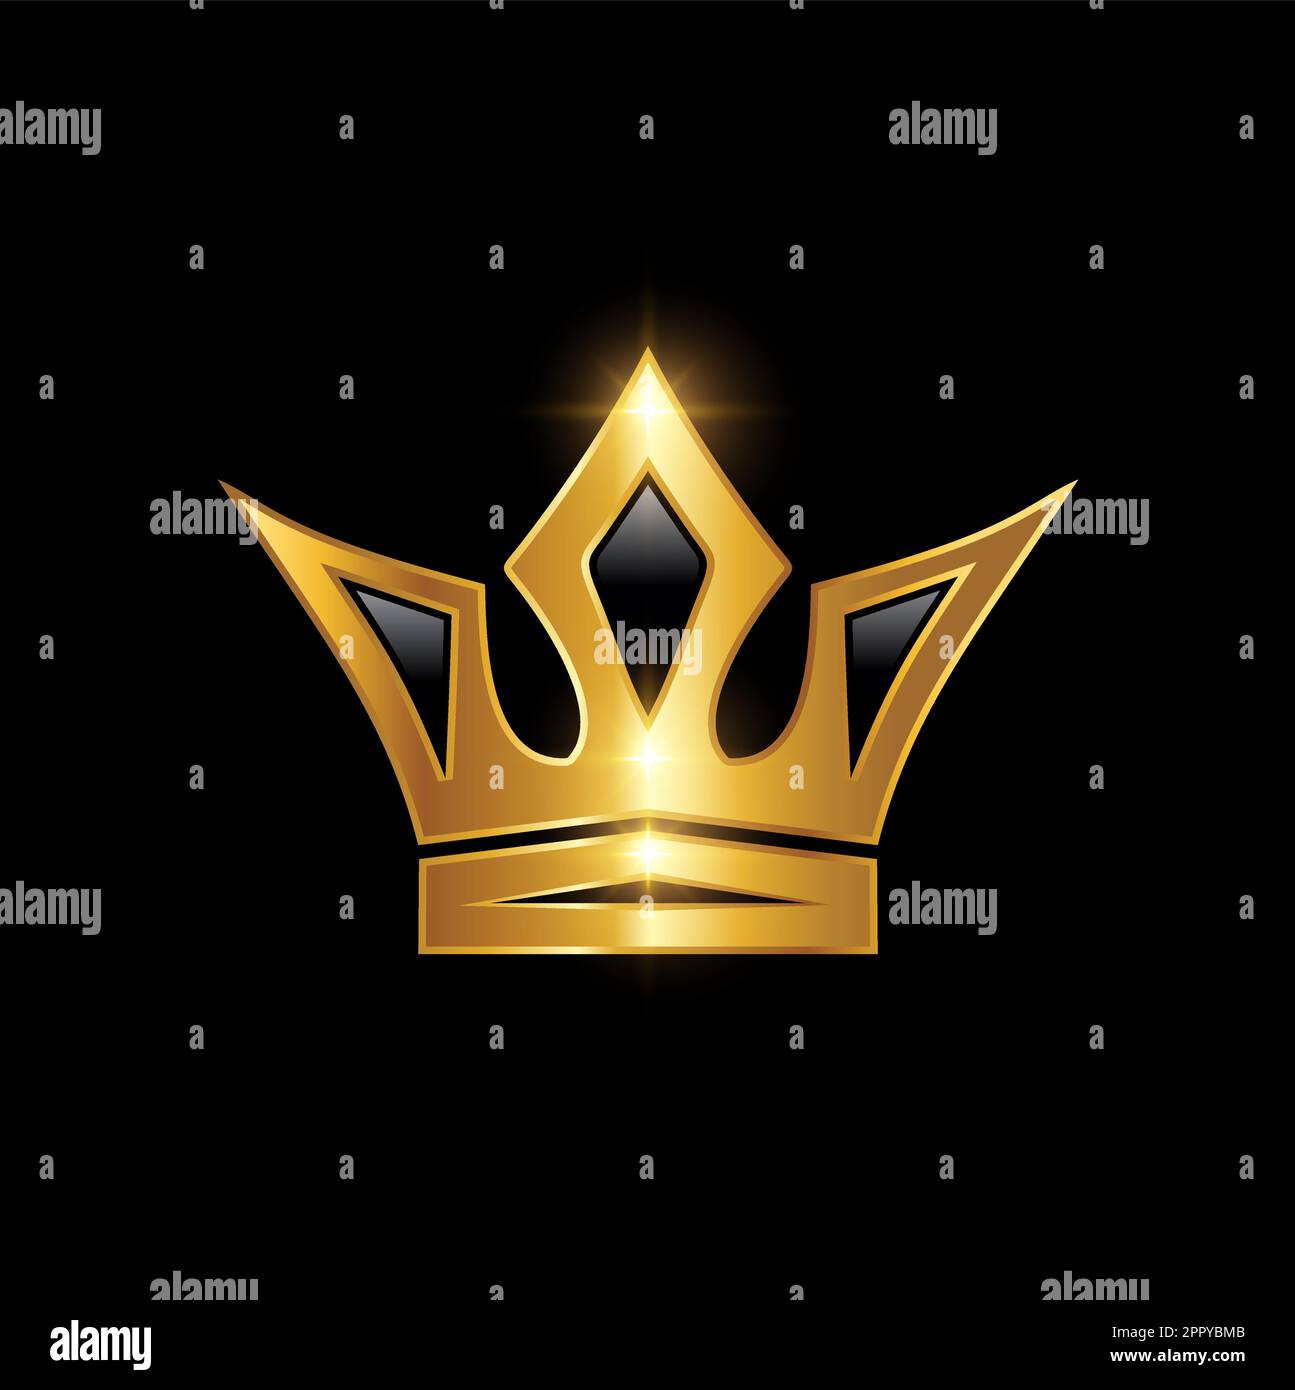 Premium Vector  Luxury brand a logo design, letter a crown golden logo  luxury style